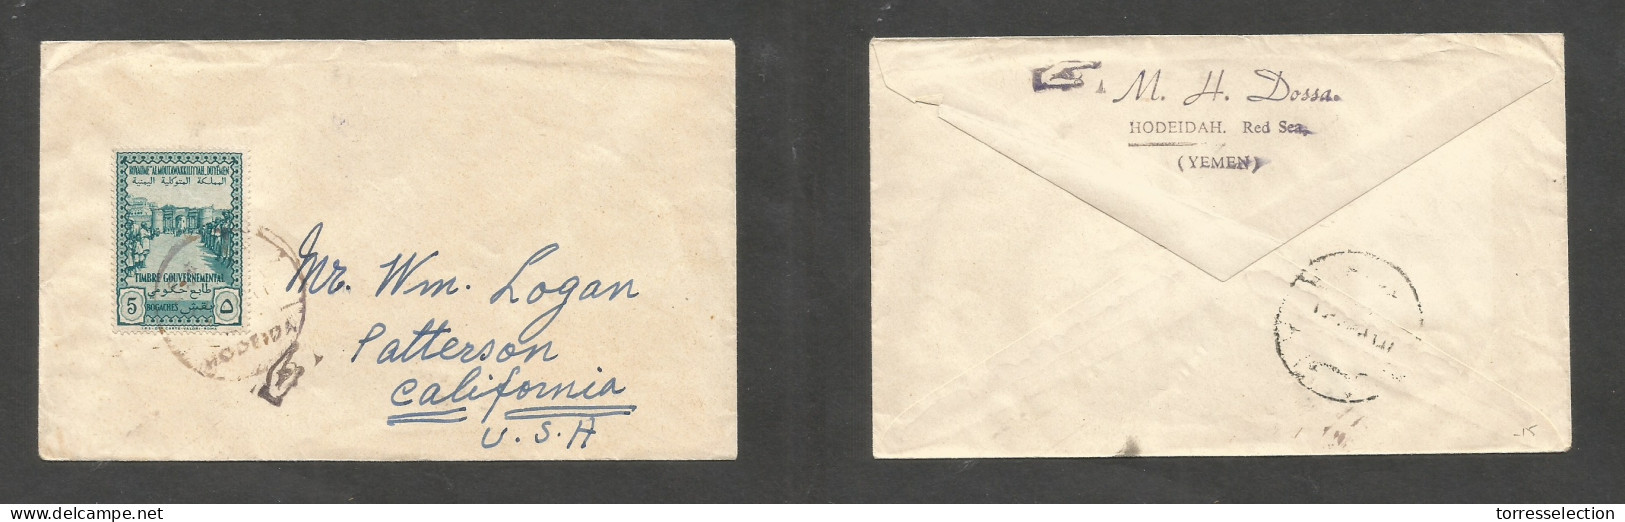 YEMEN. C. 1950s. Hodeida - USA, CA, Patterson. 5 Bogaches Single Unseald Fkd Envelope, Violet Cachet + Transit Reverse.  - Yémen